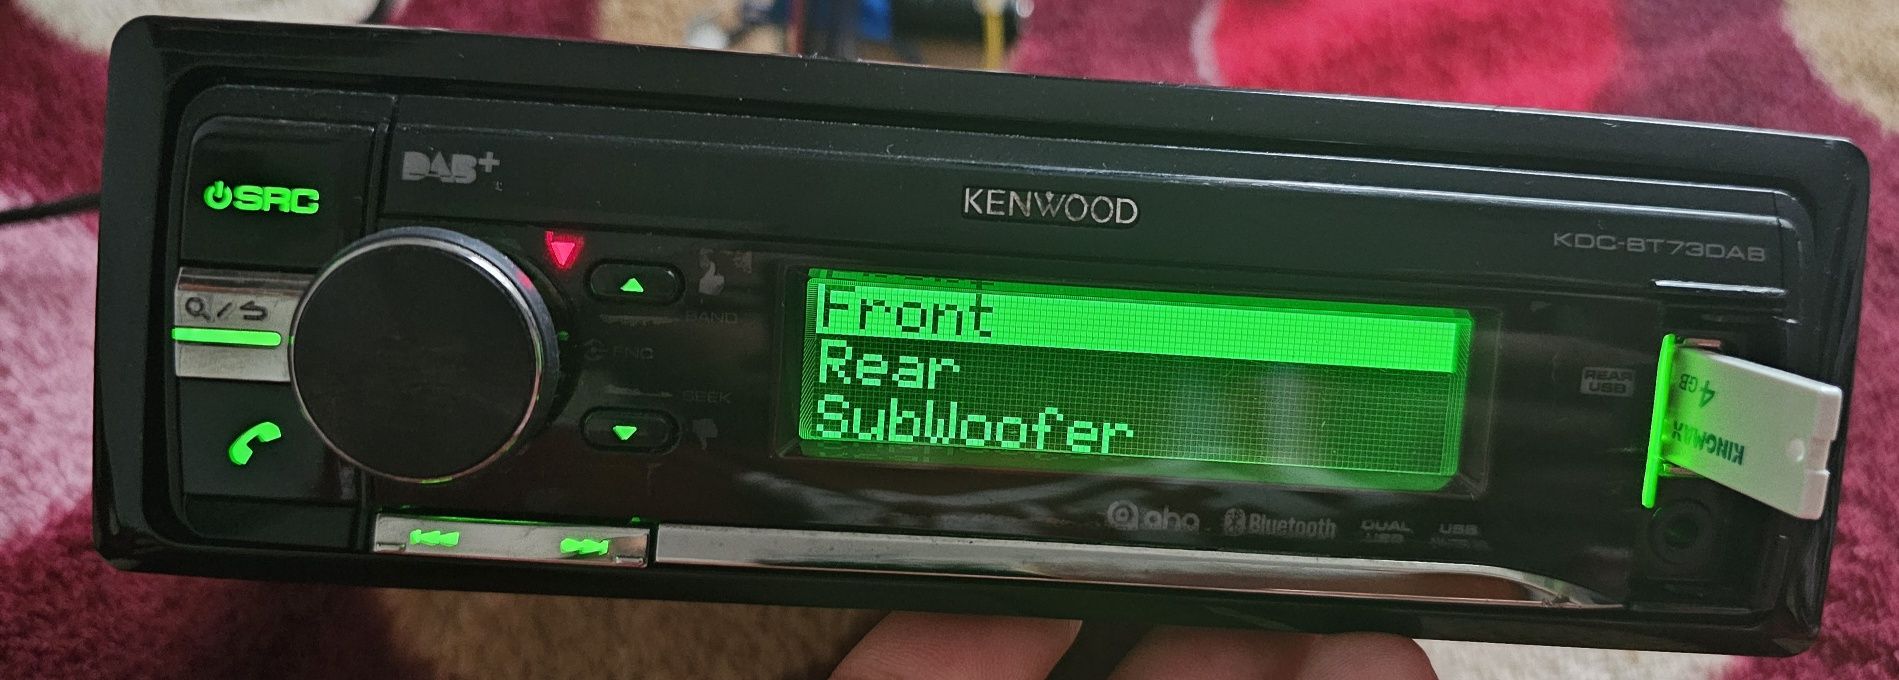 Mp3 player auto Bluetooth Kenwood kdc-bt73dab